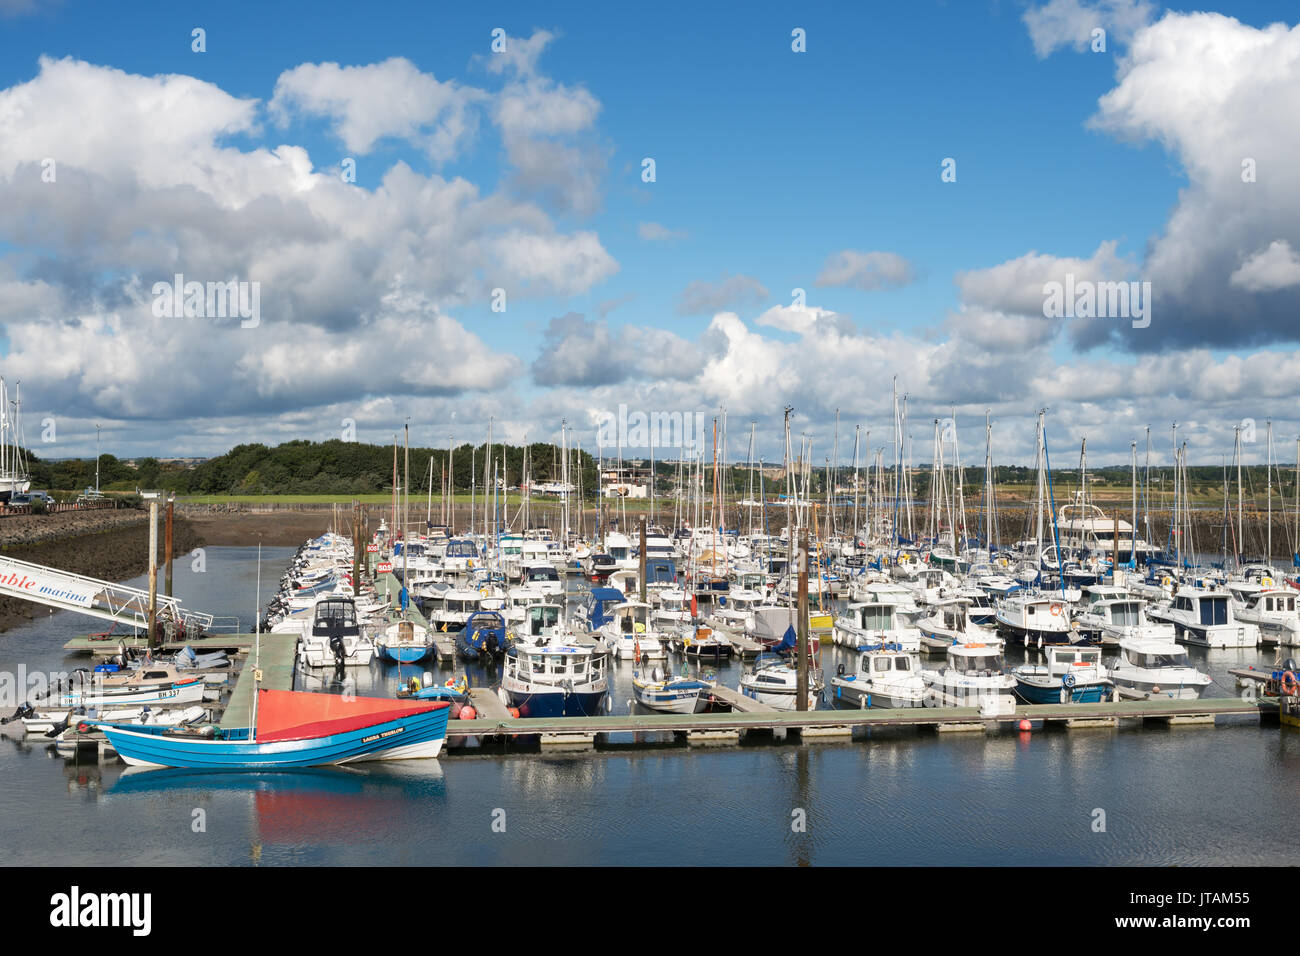 Amble marina, Northumberland, England, UK Banque D'Images